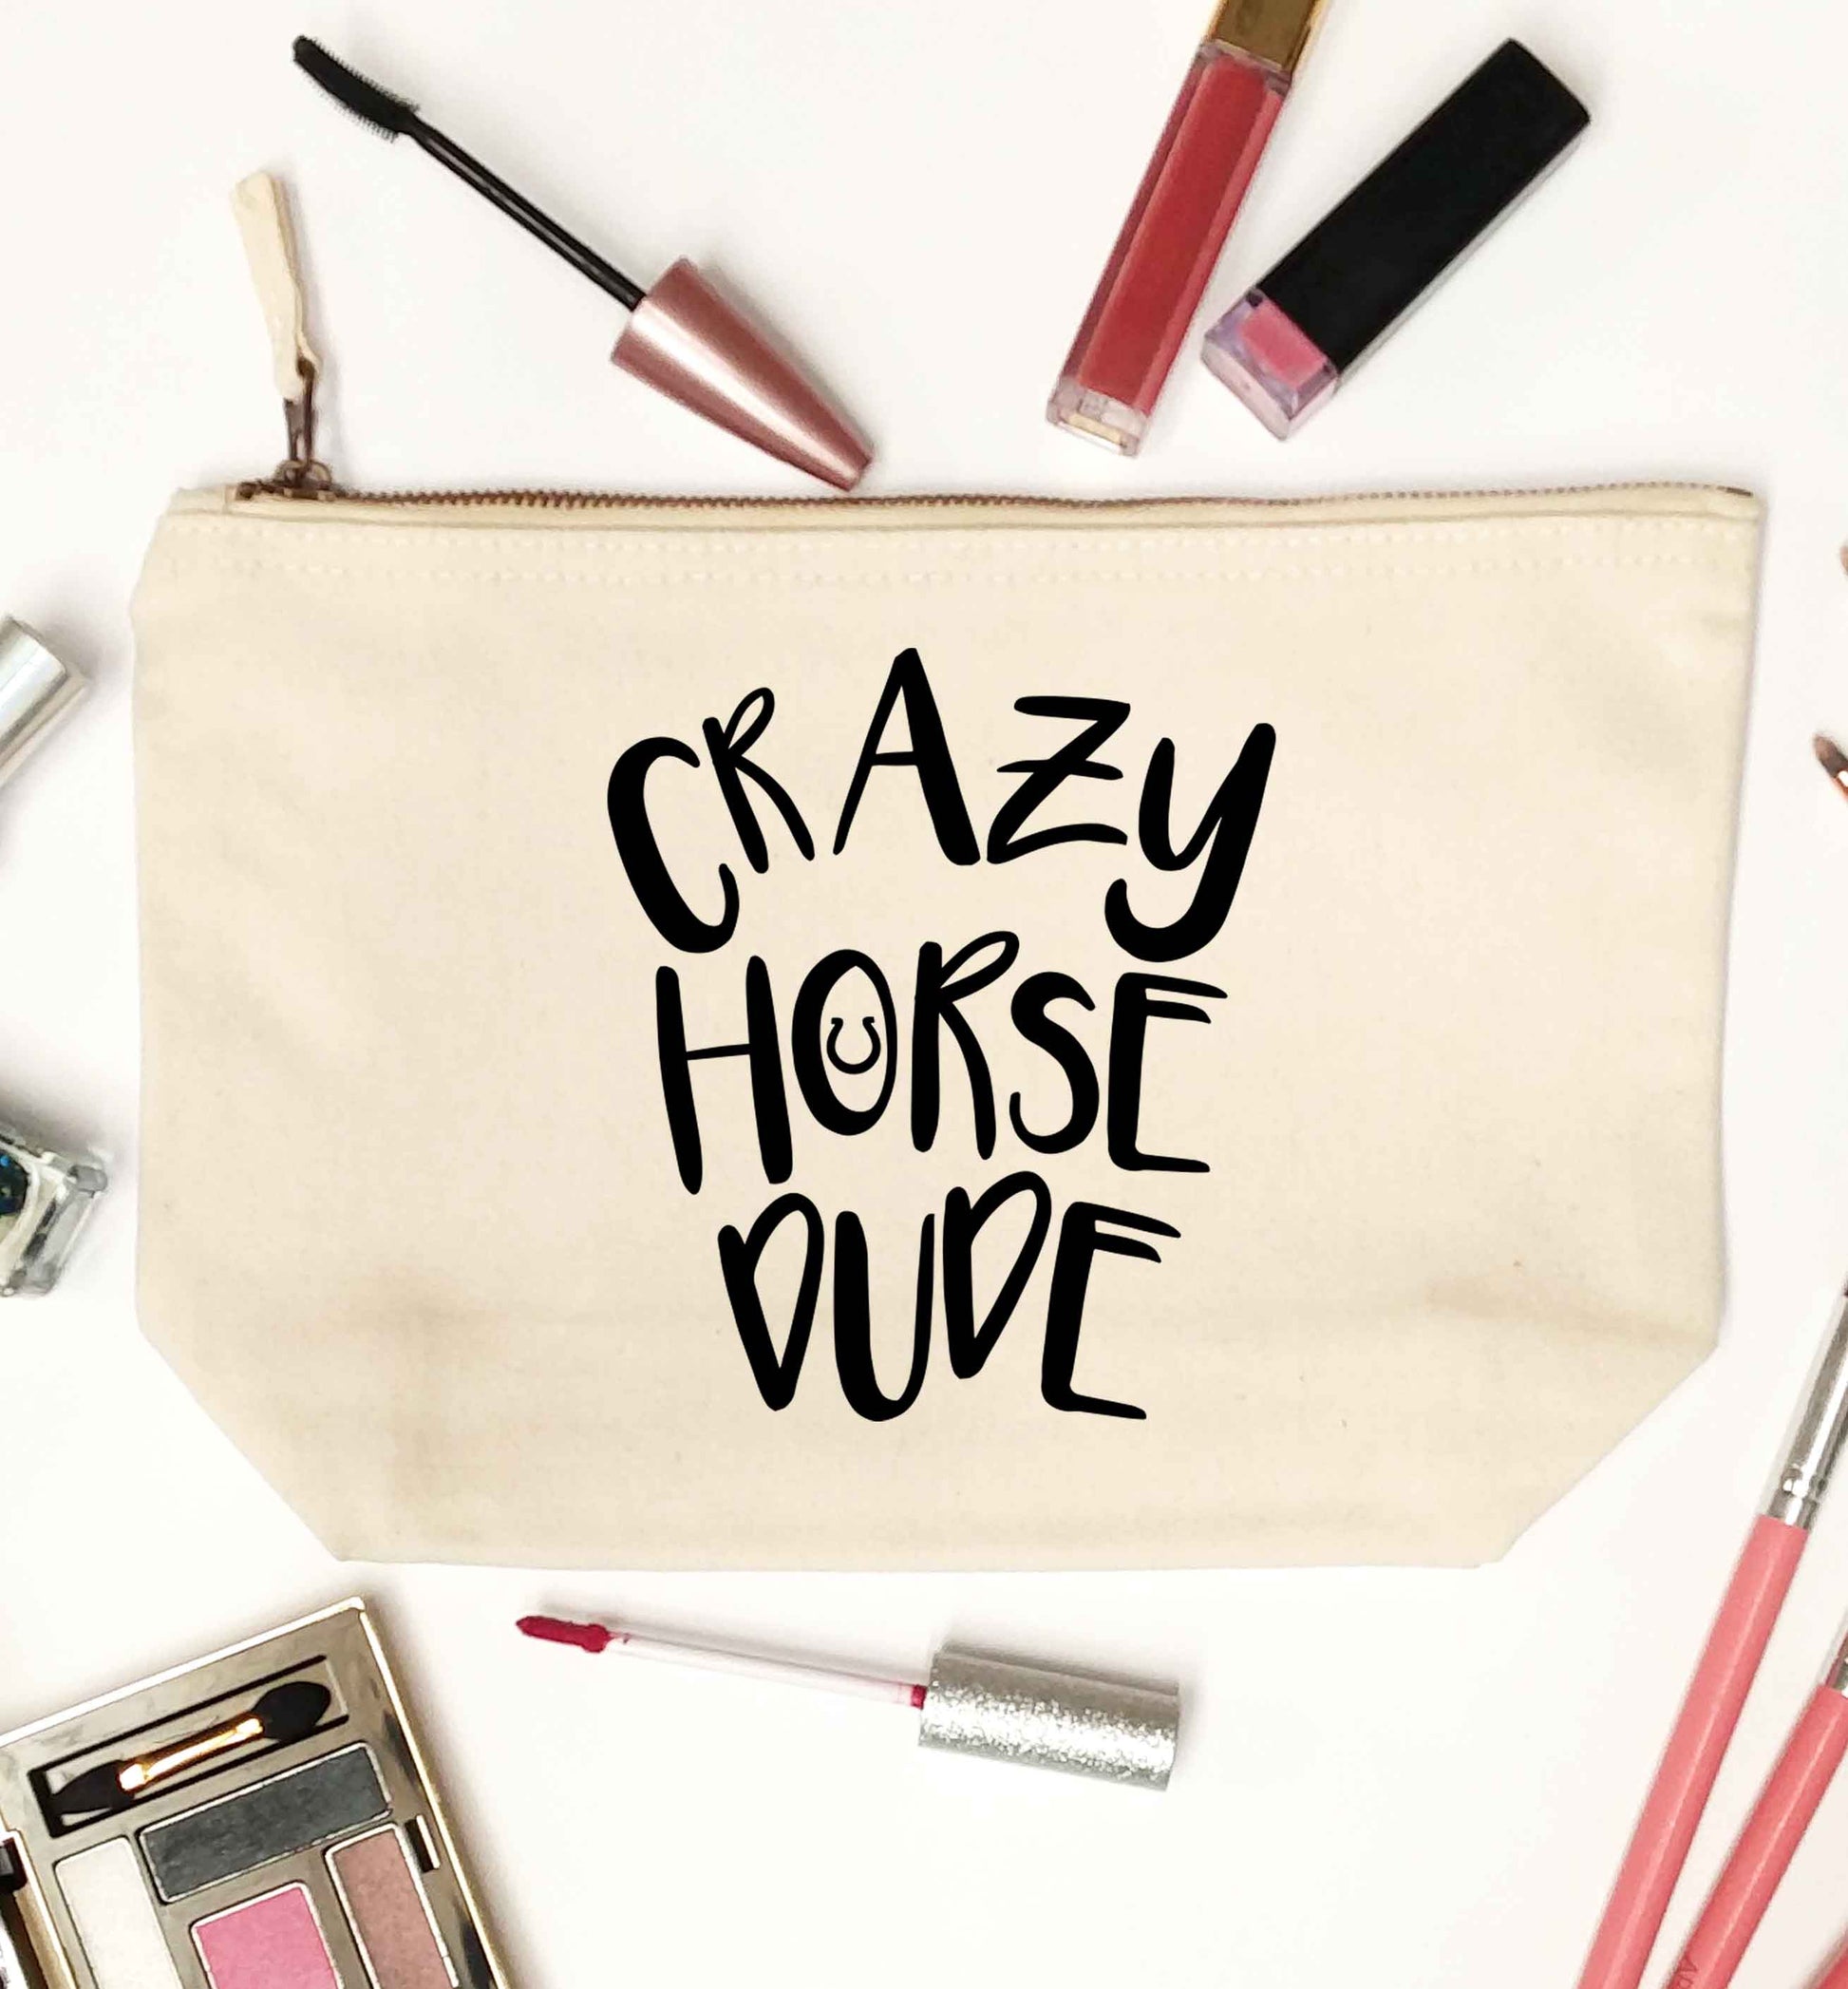 Crazy horse dude natural makeup bag